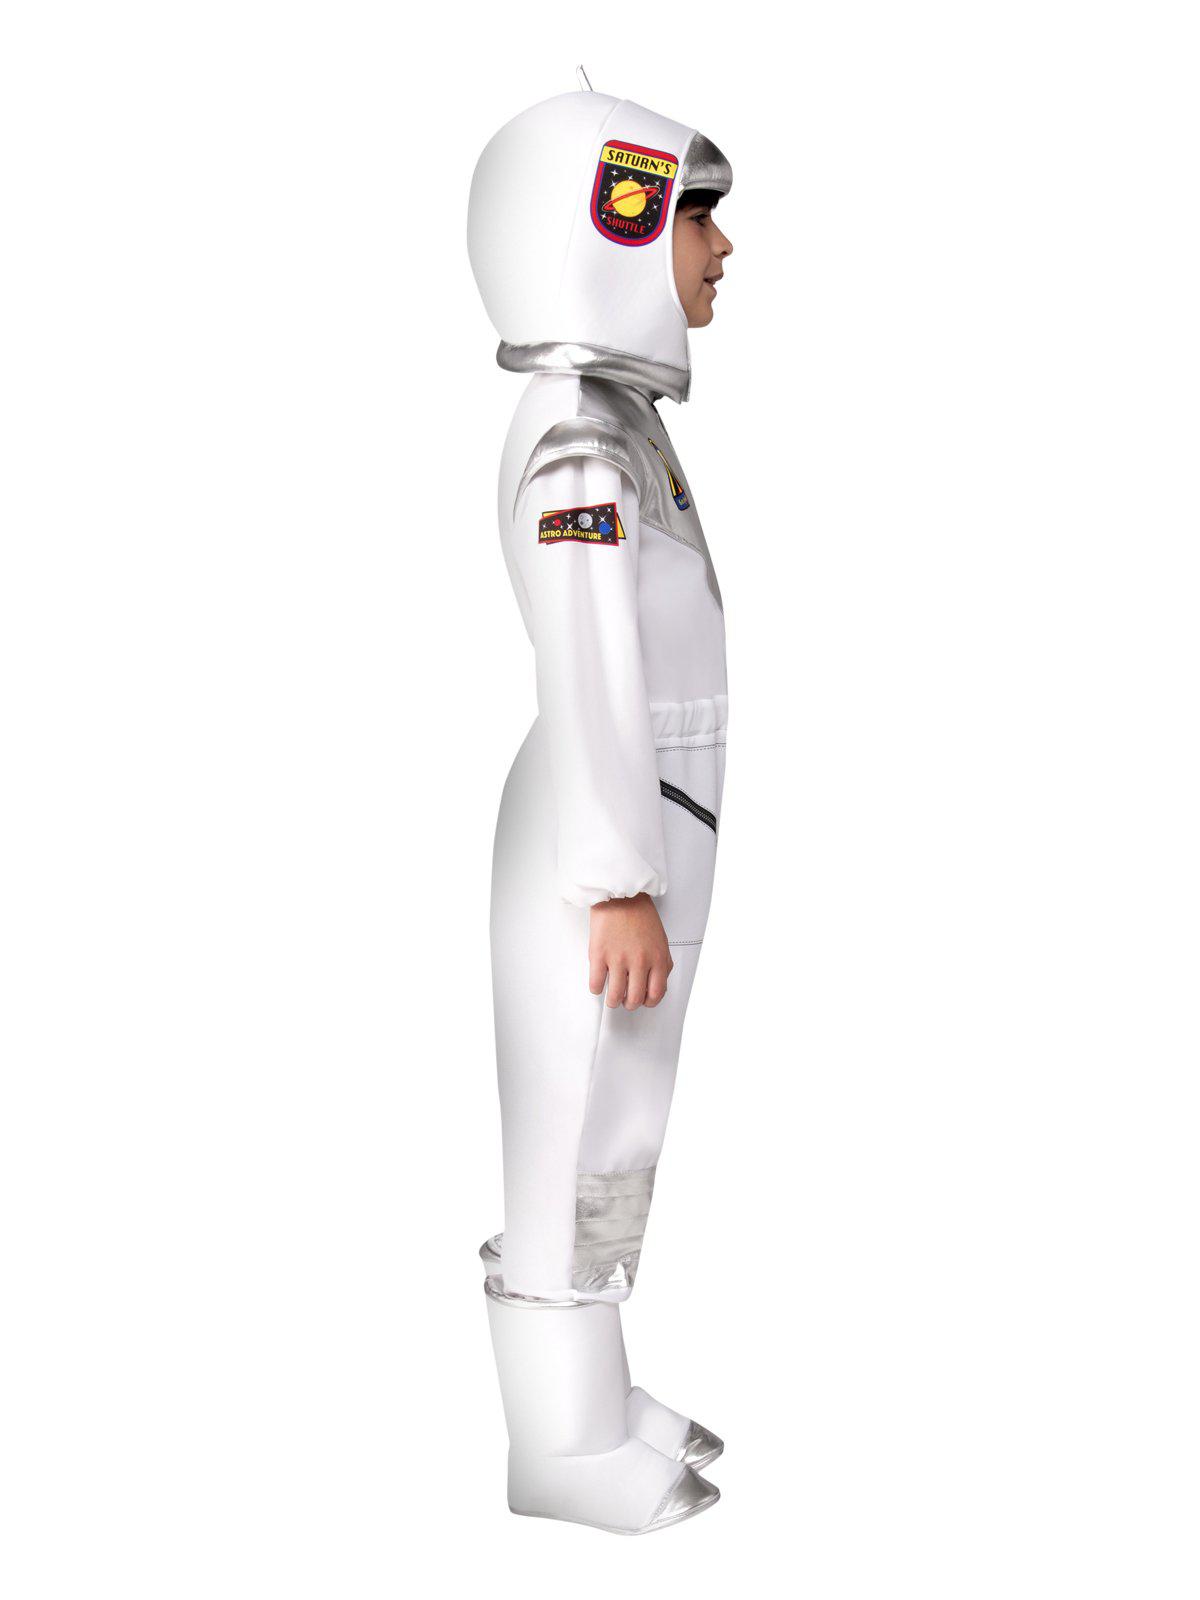 Space Suit Costume Kids